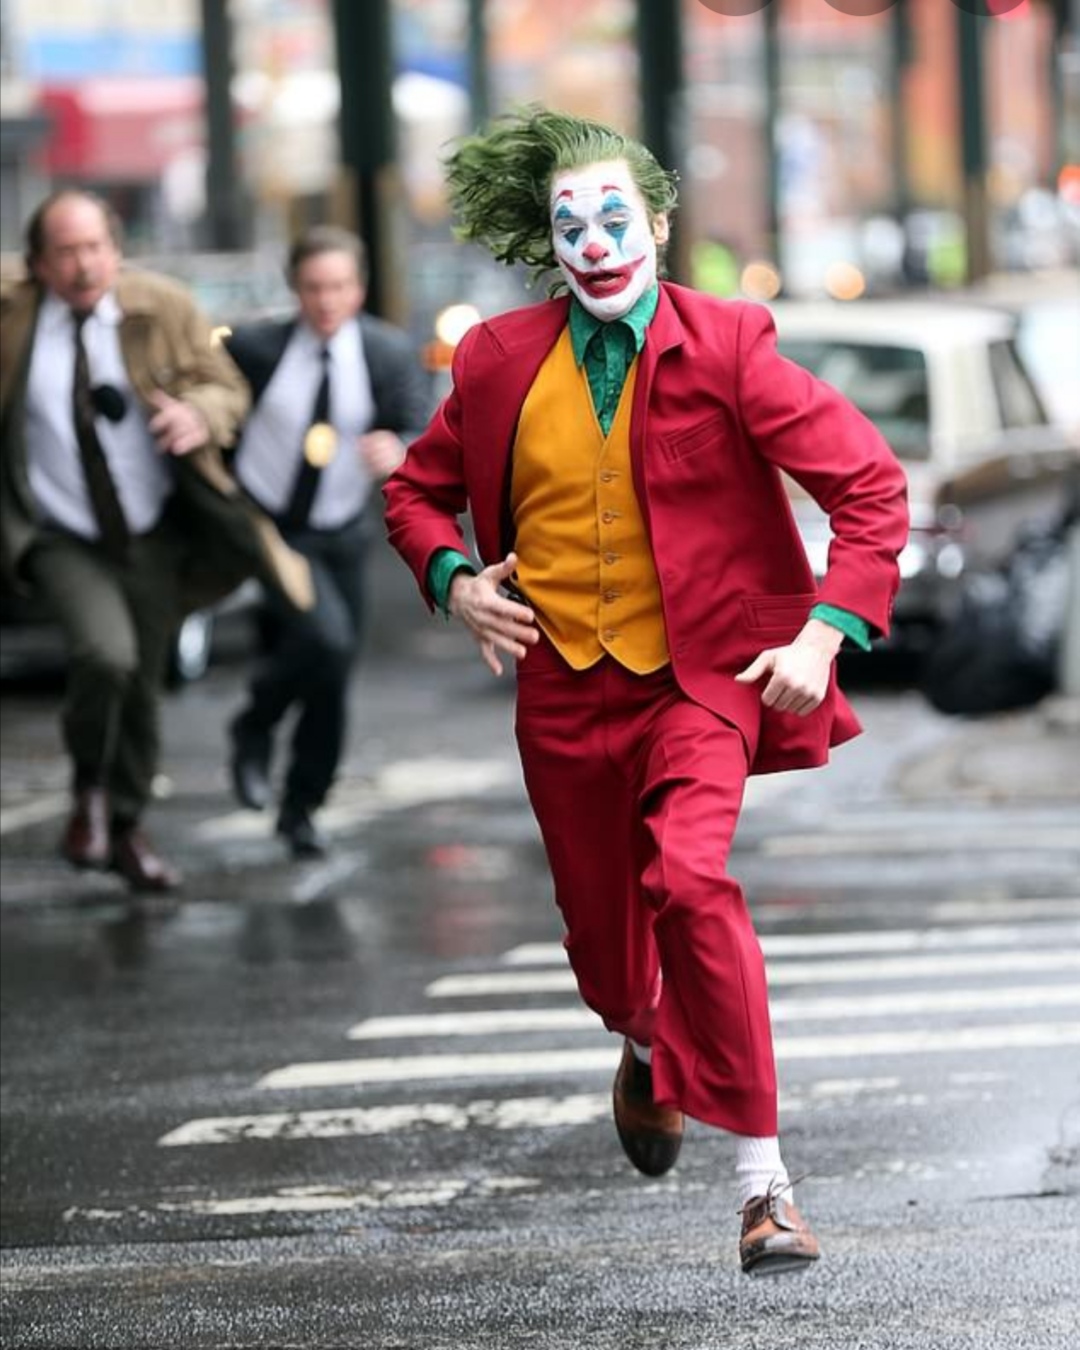 Joker running away from cops Blank Meme Template